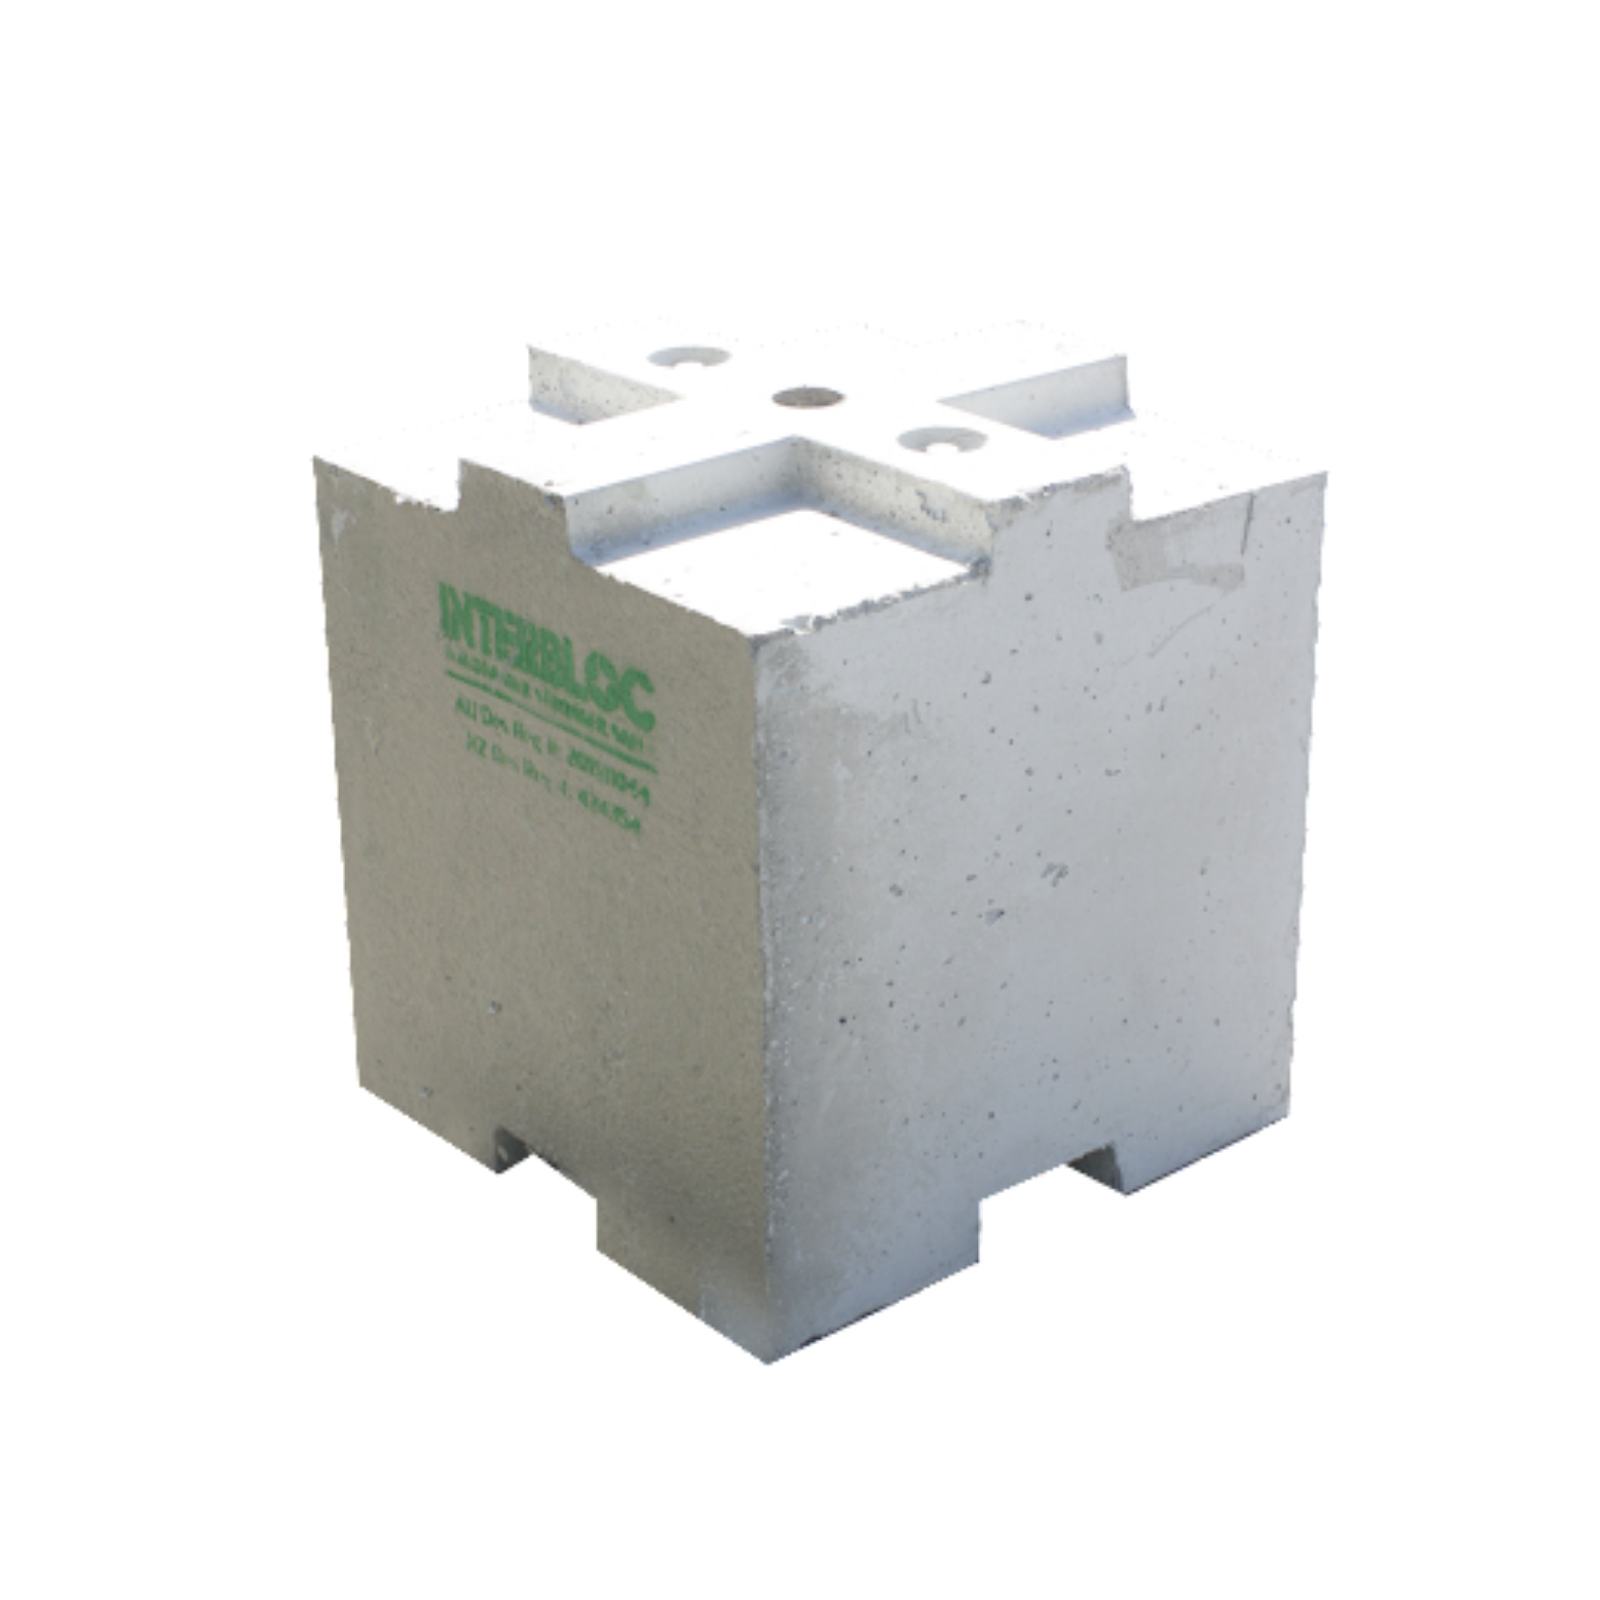 600 Standard Interbloc concrete block